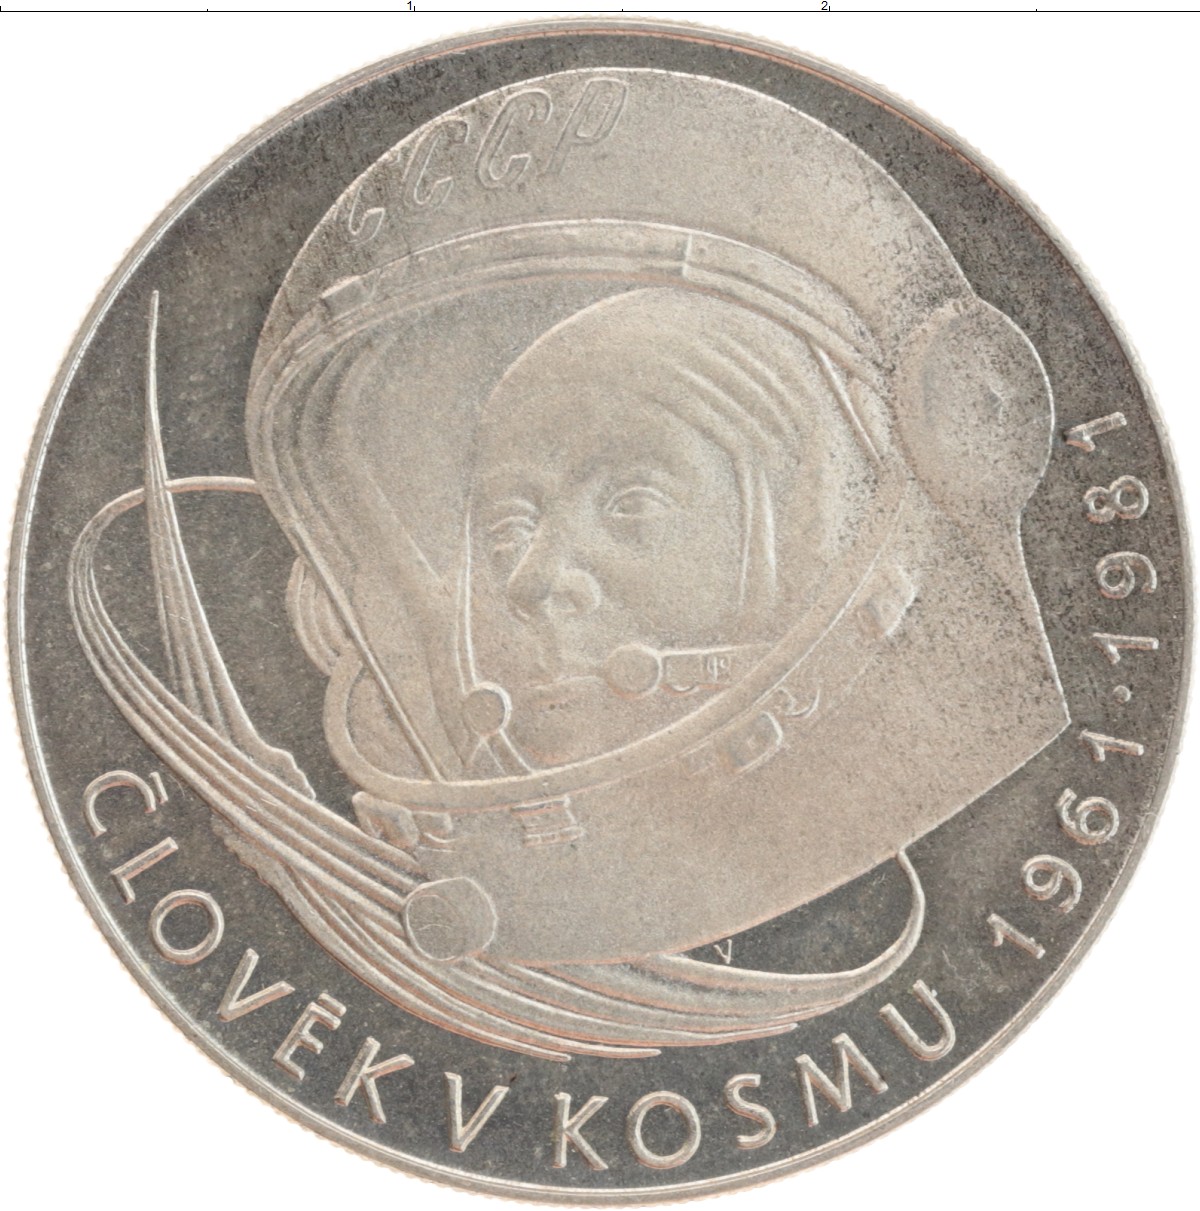 100 крон. Монета Чехословакии 100 крон (1981). Чехословацкие кроны. 100 Крон платина. Юбилейные монеты Чехословакии 1981.